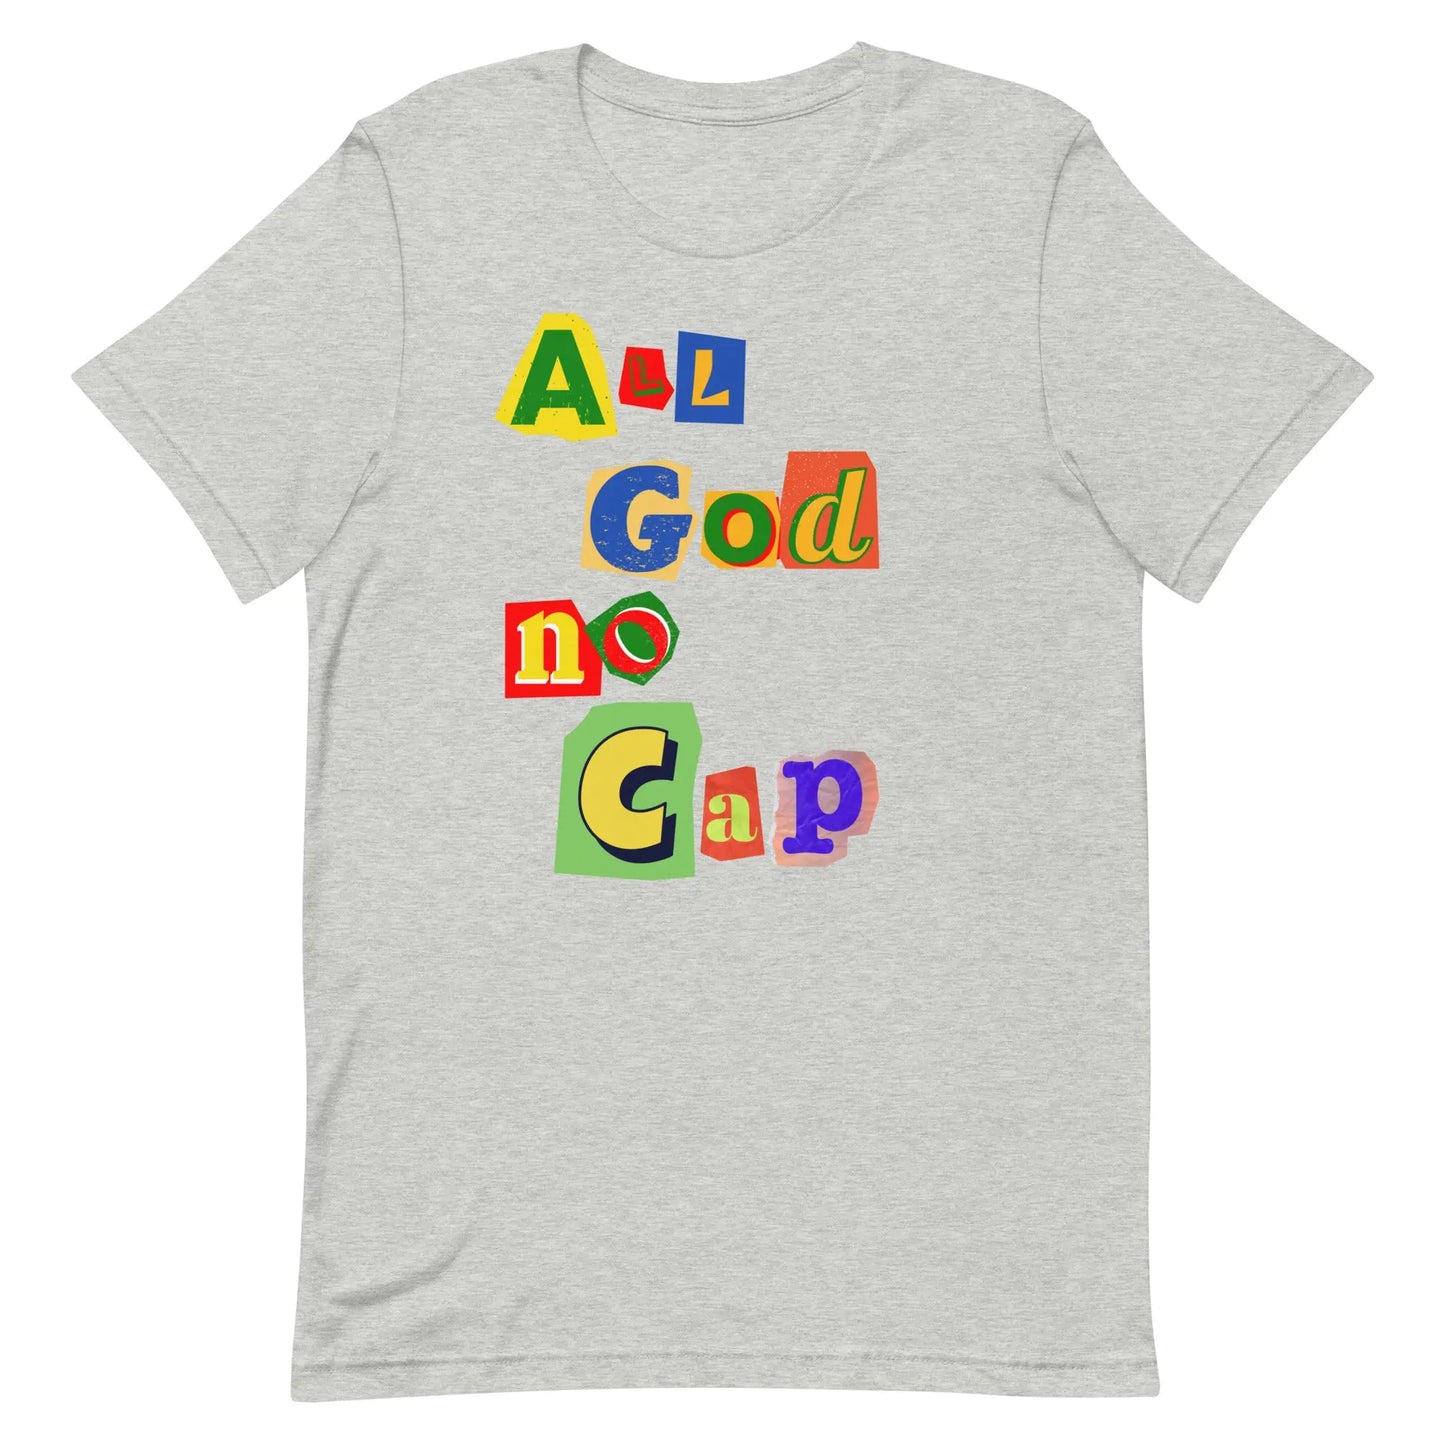 Unisex 90's themed ALL GOD NO CAP t-shirt